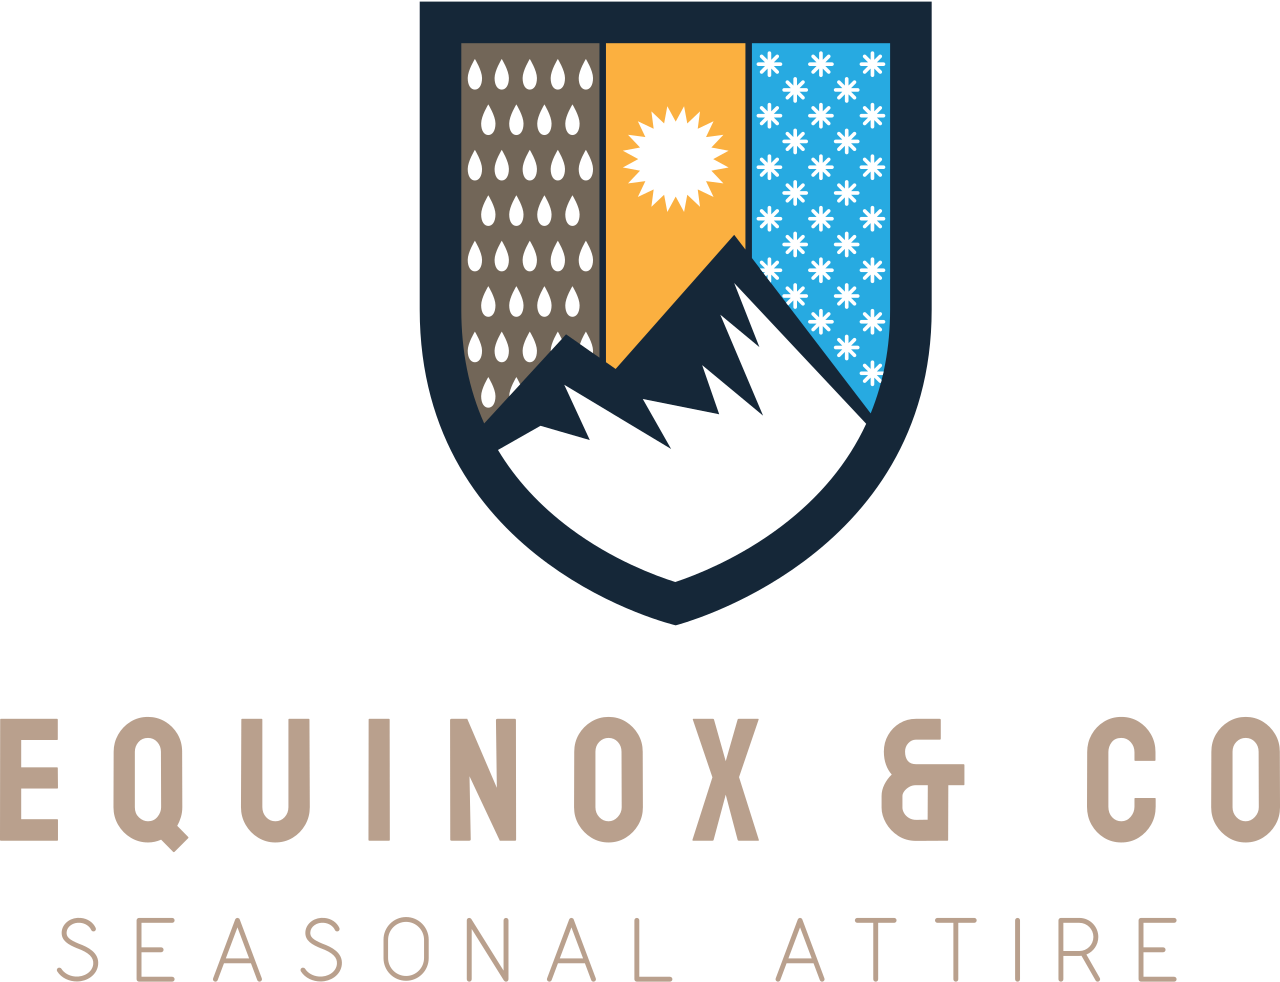 Equinox & Co 's web page